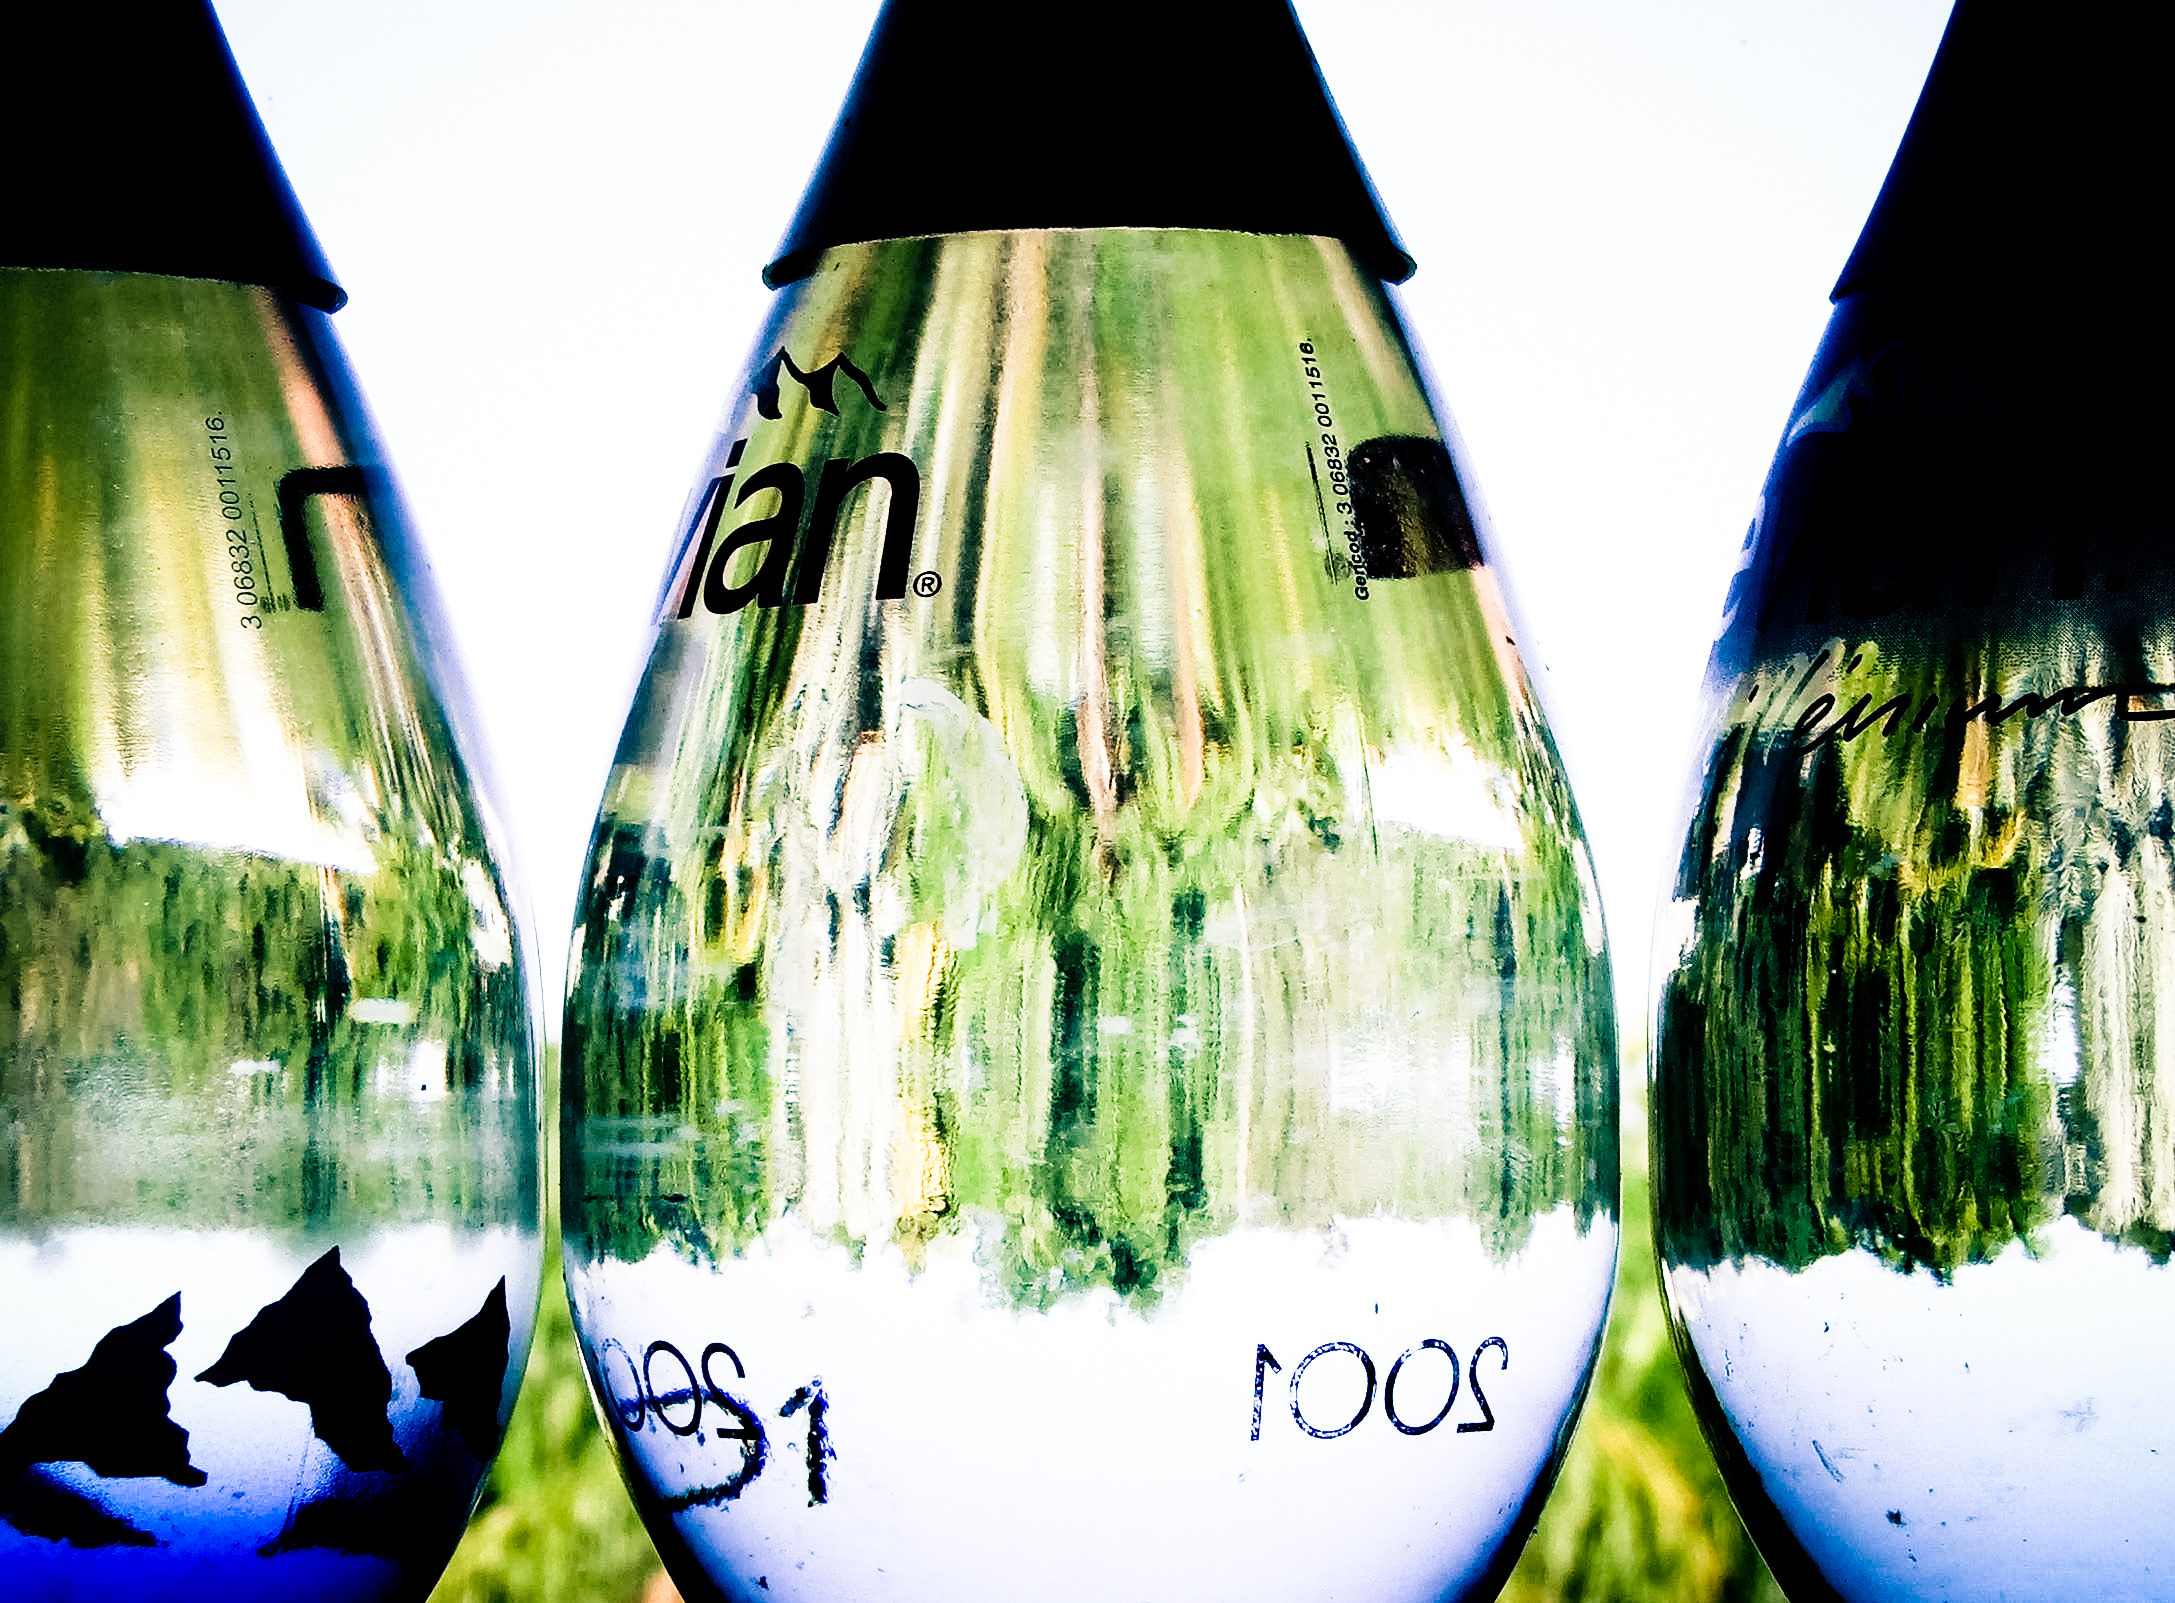 Evian water bottles photo